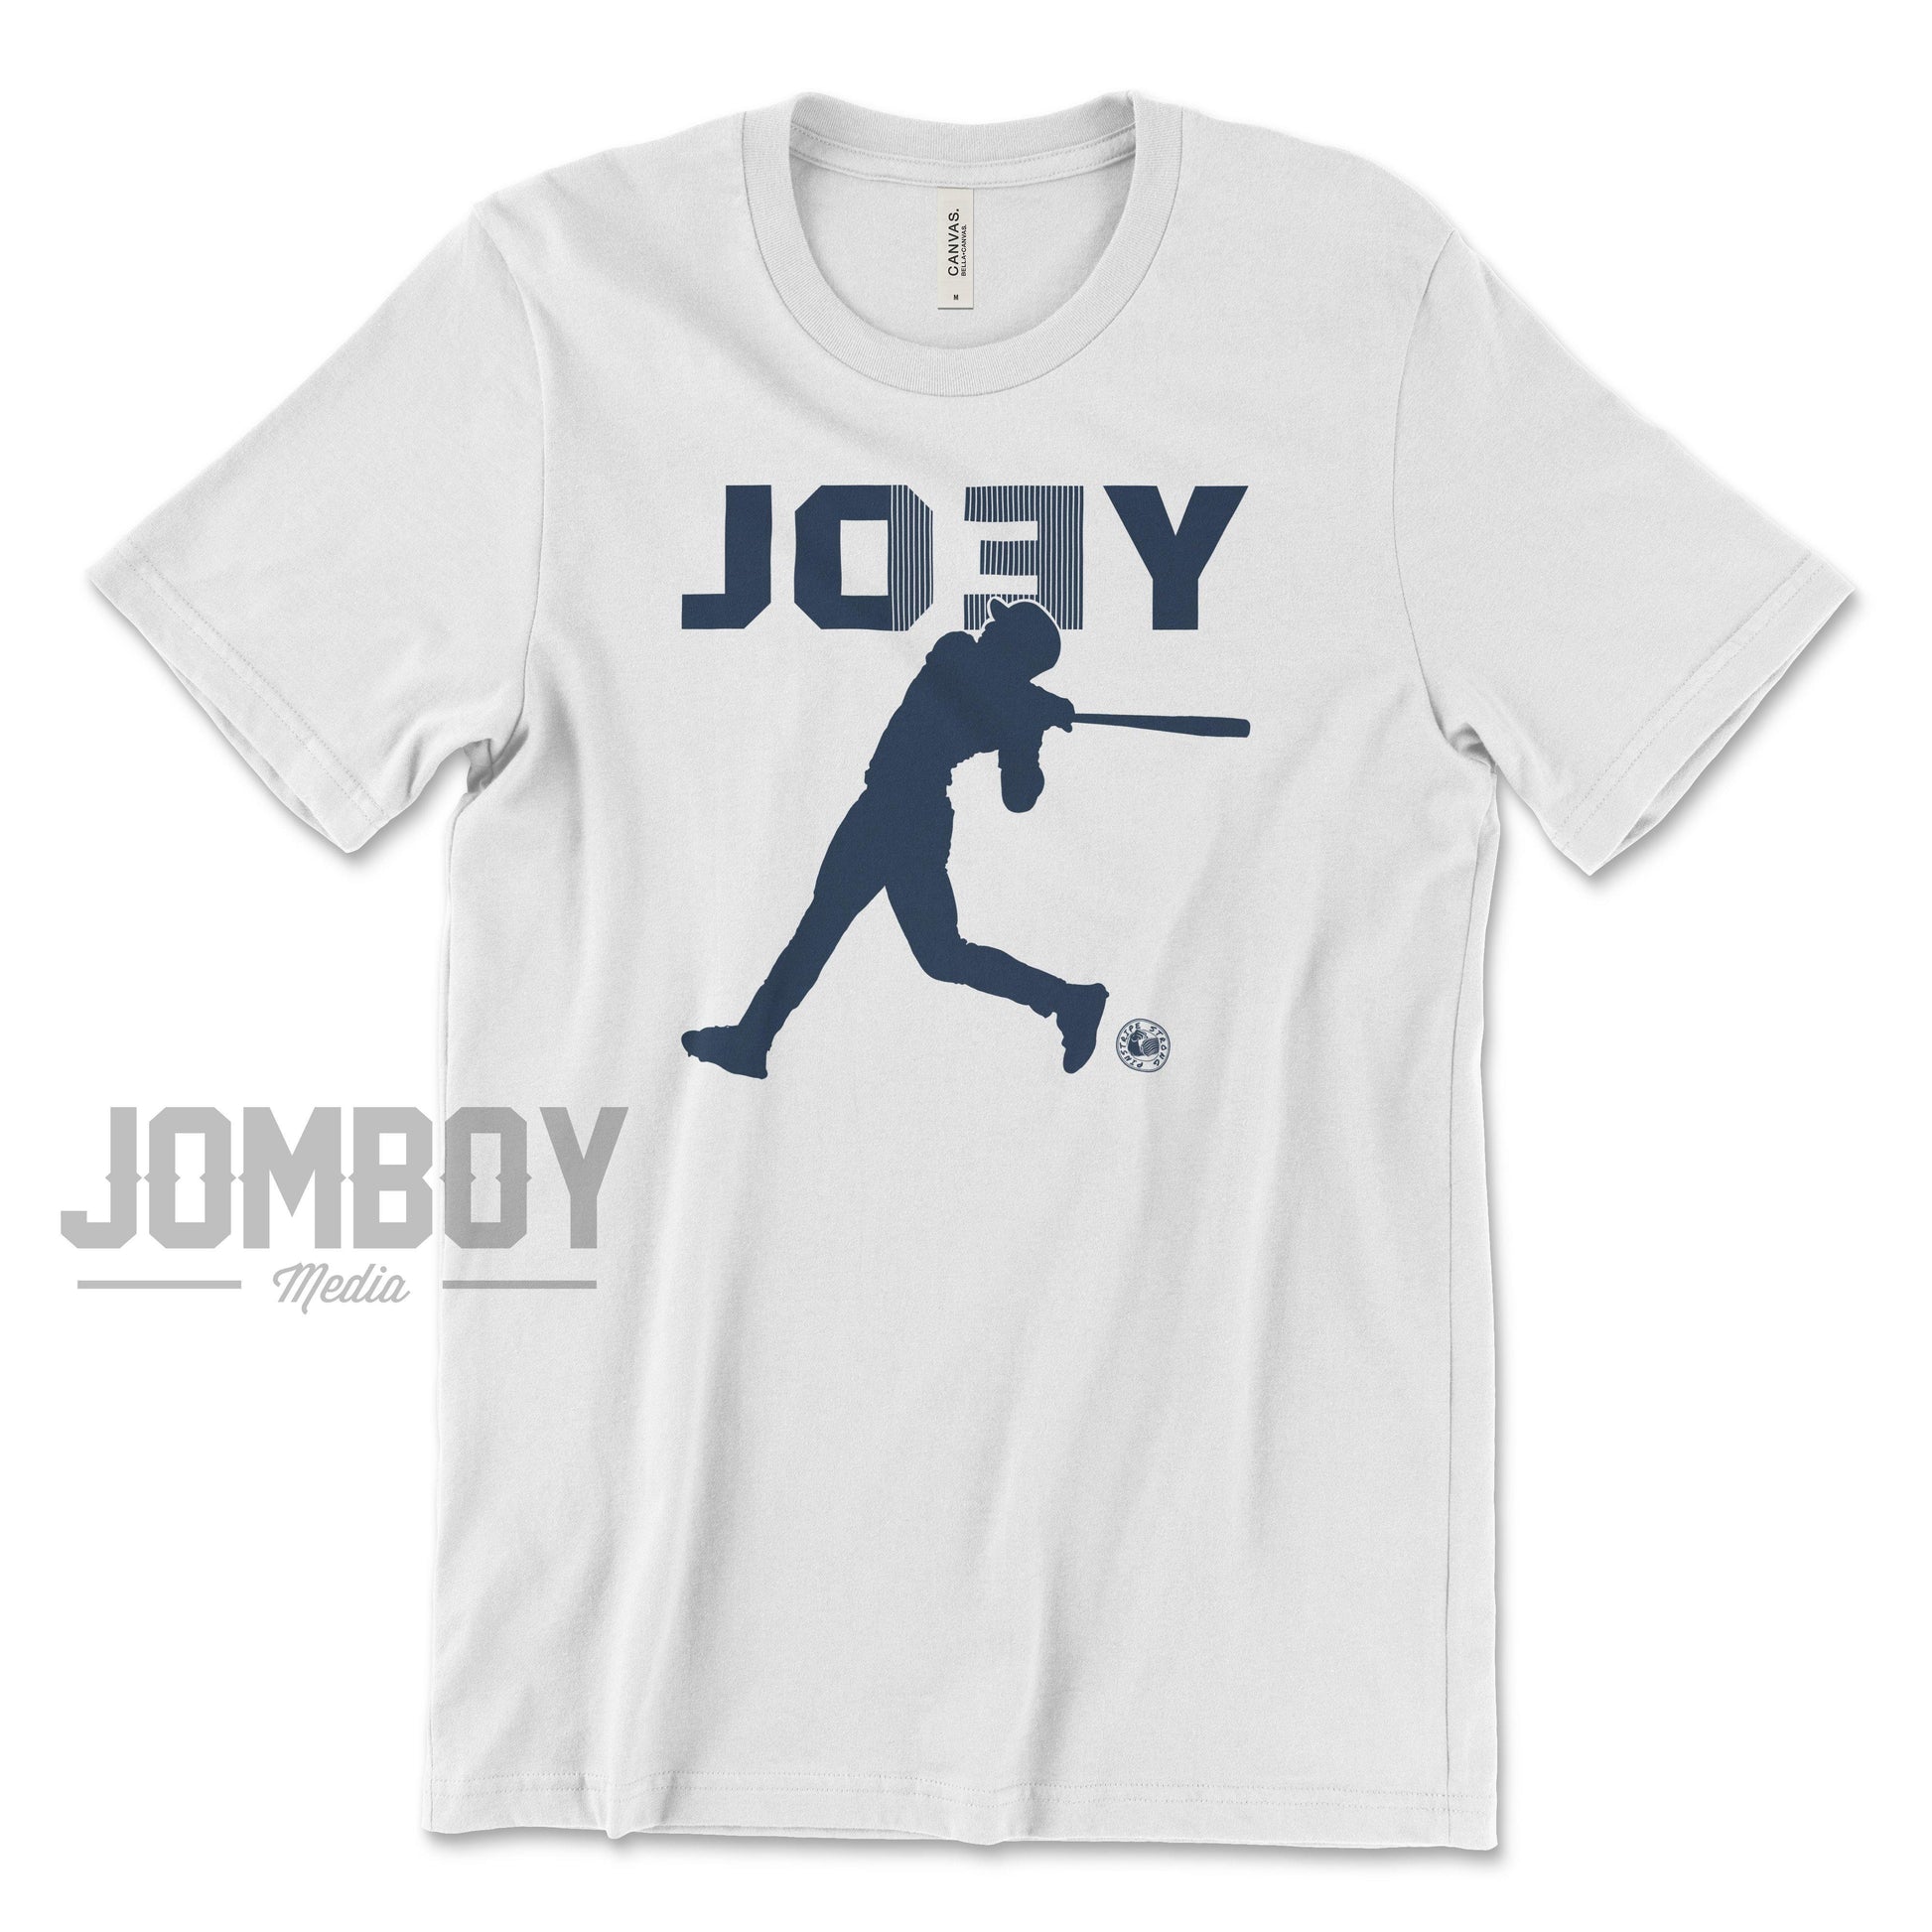 JOEY | T-Shirt - Jomboy Media